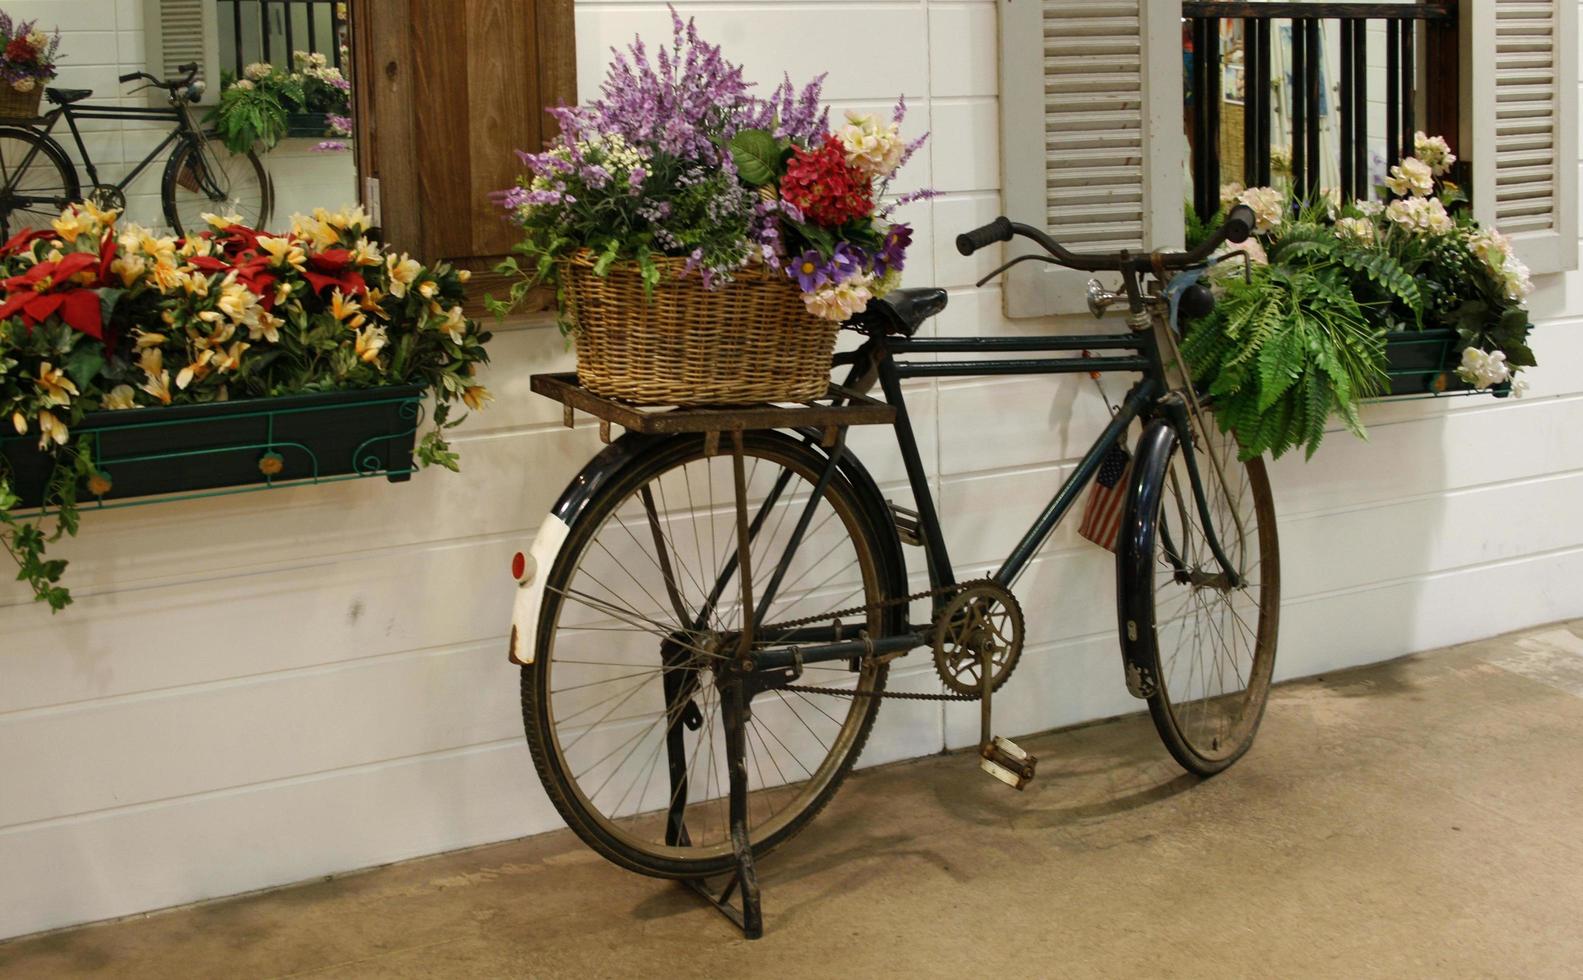 Bike with flowers photo